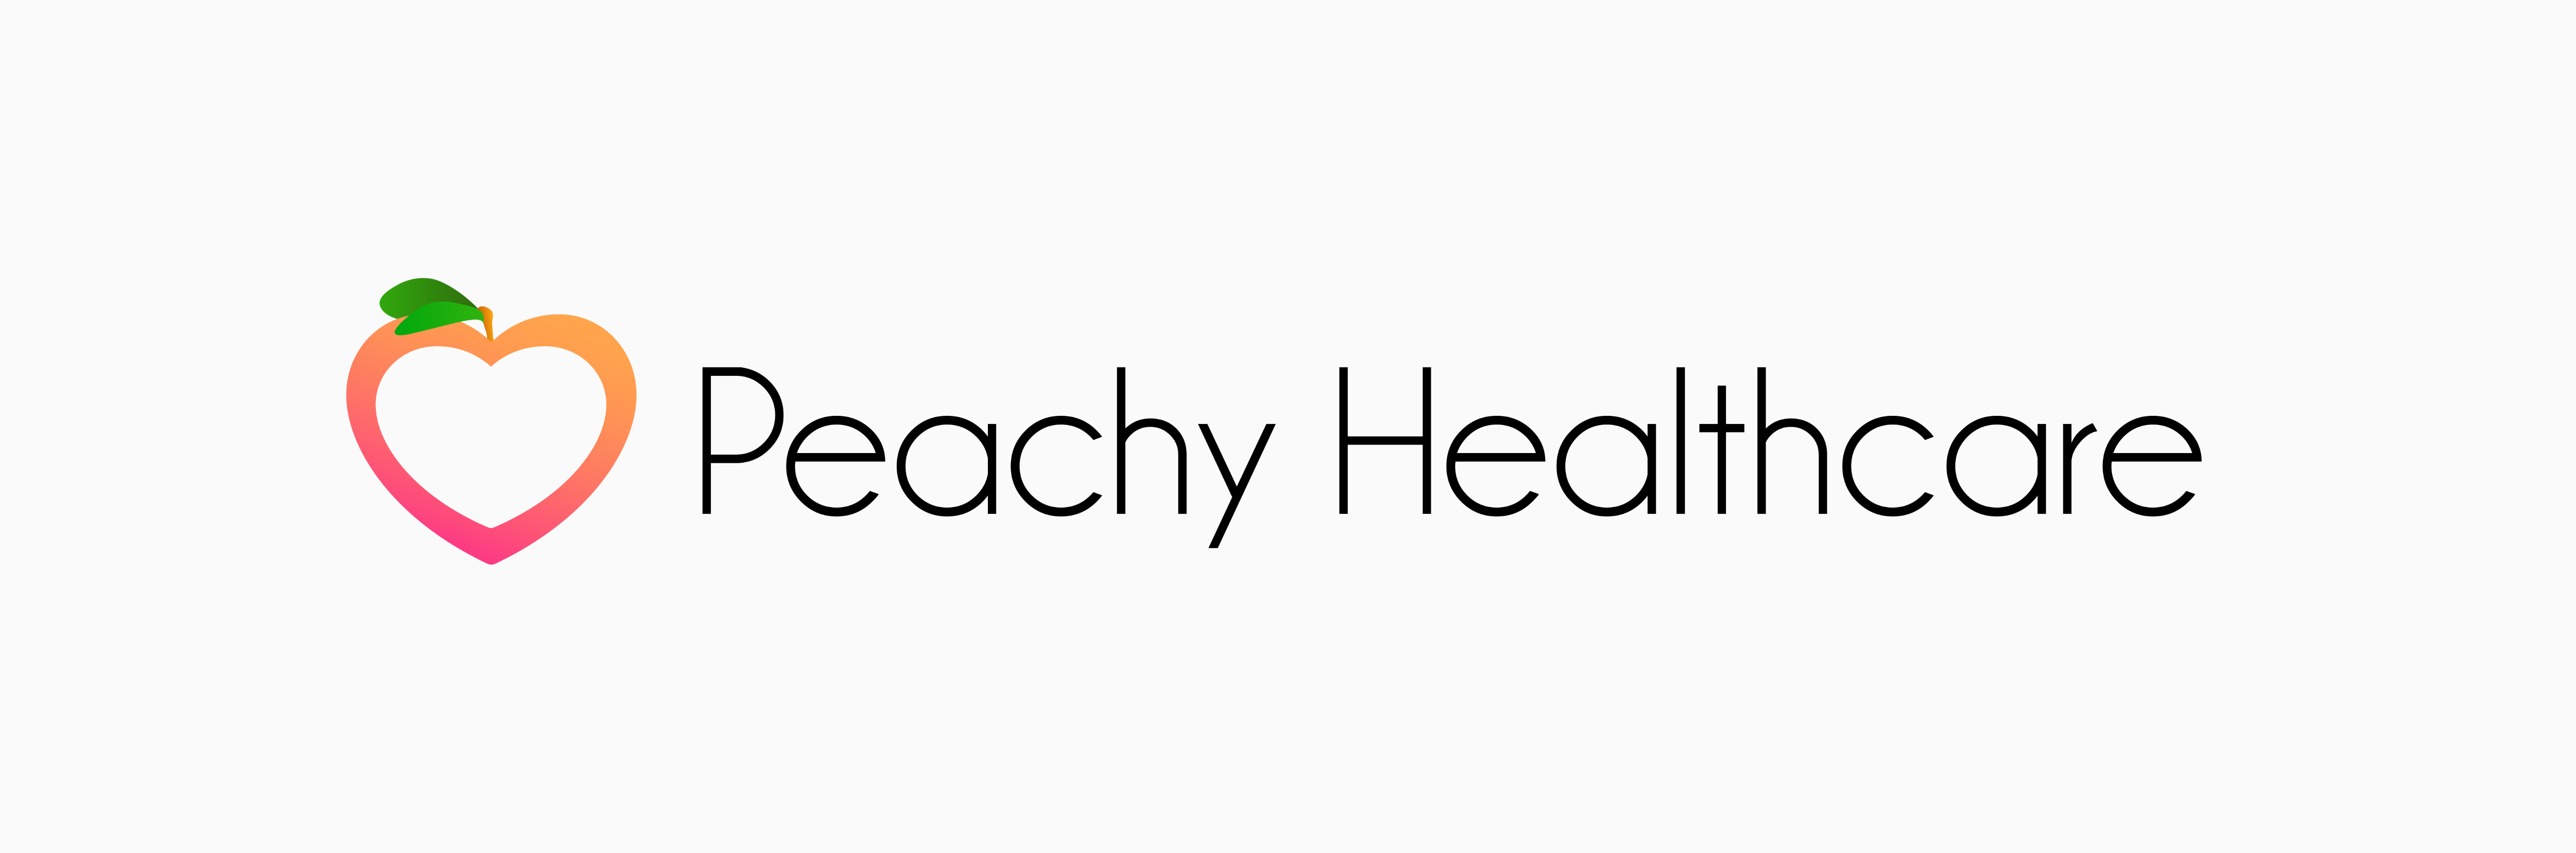 Peachy healthcare Dashboard